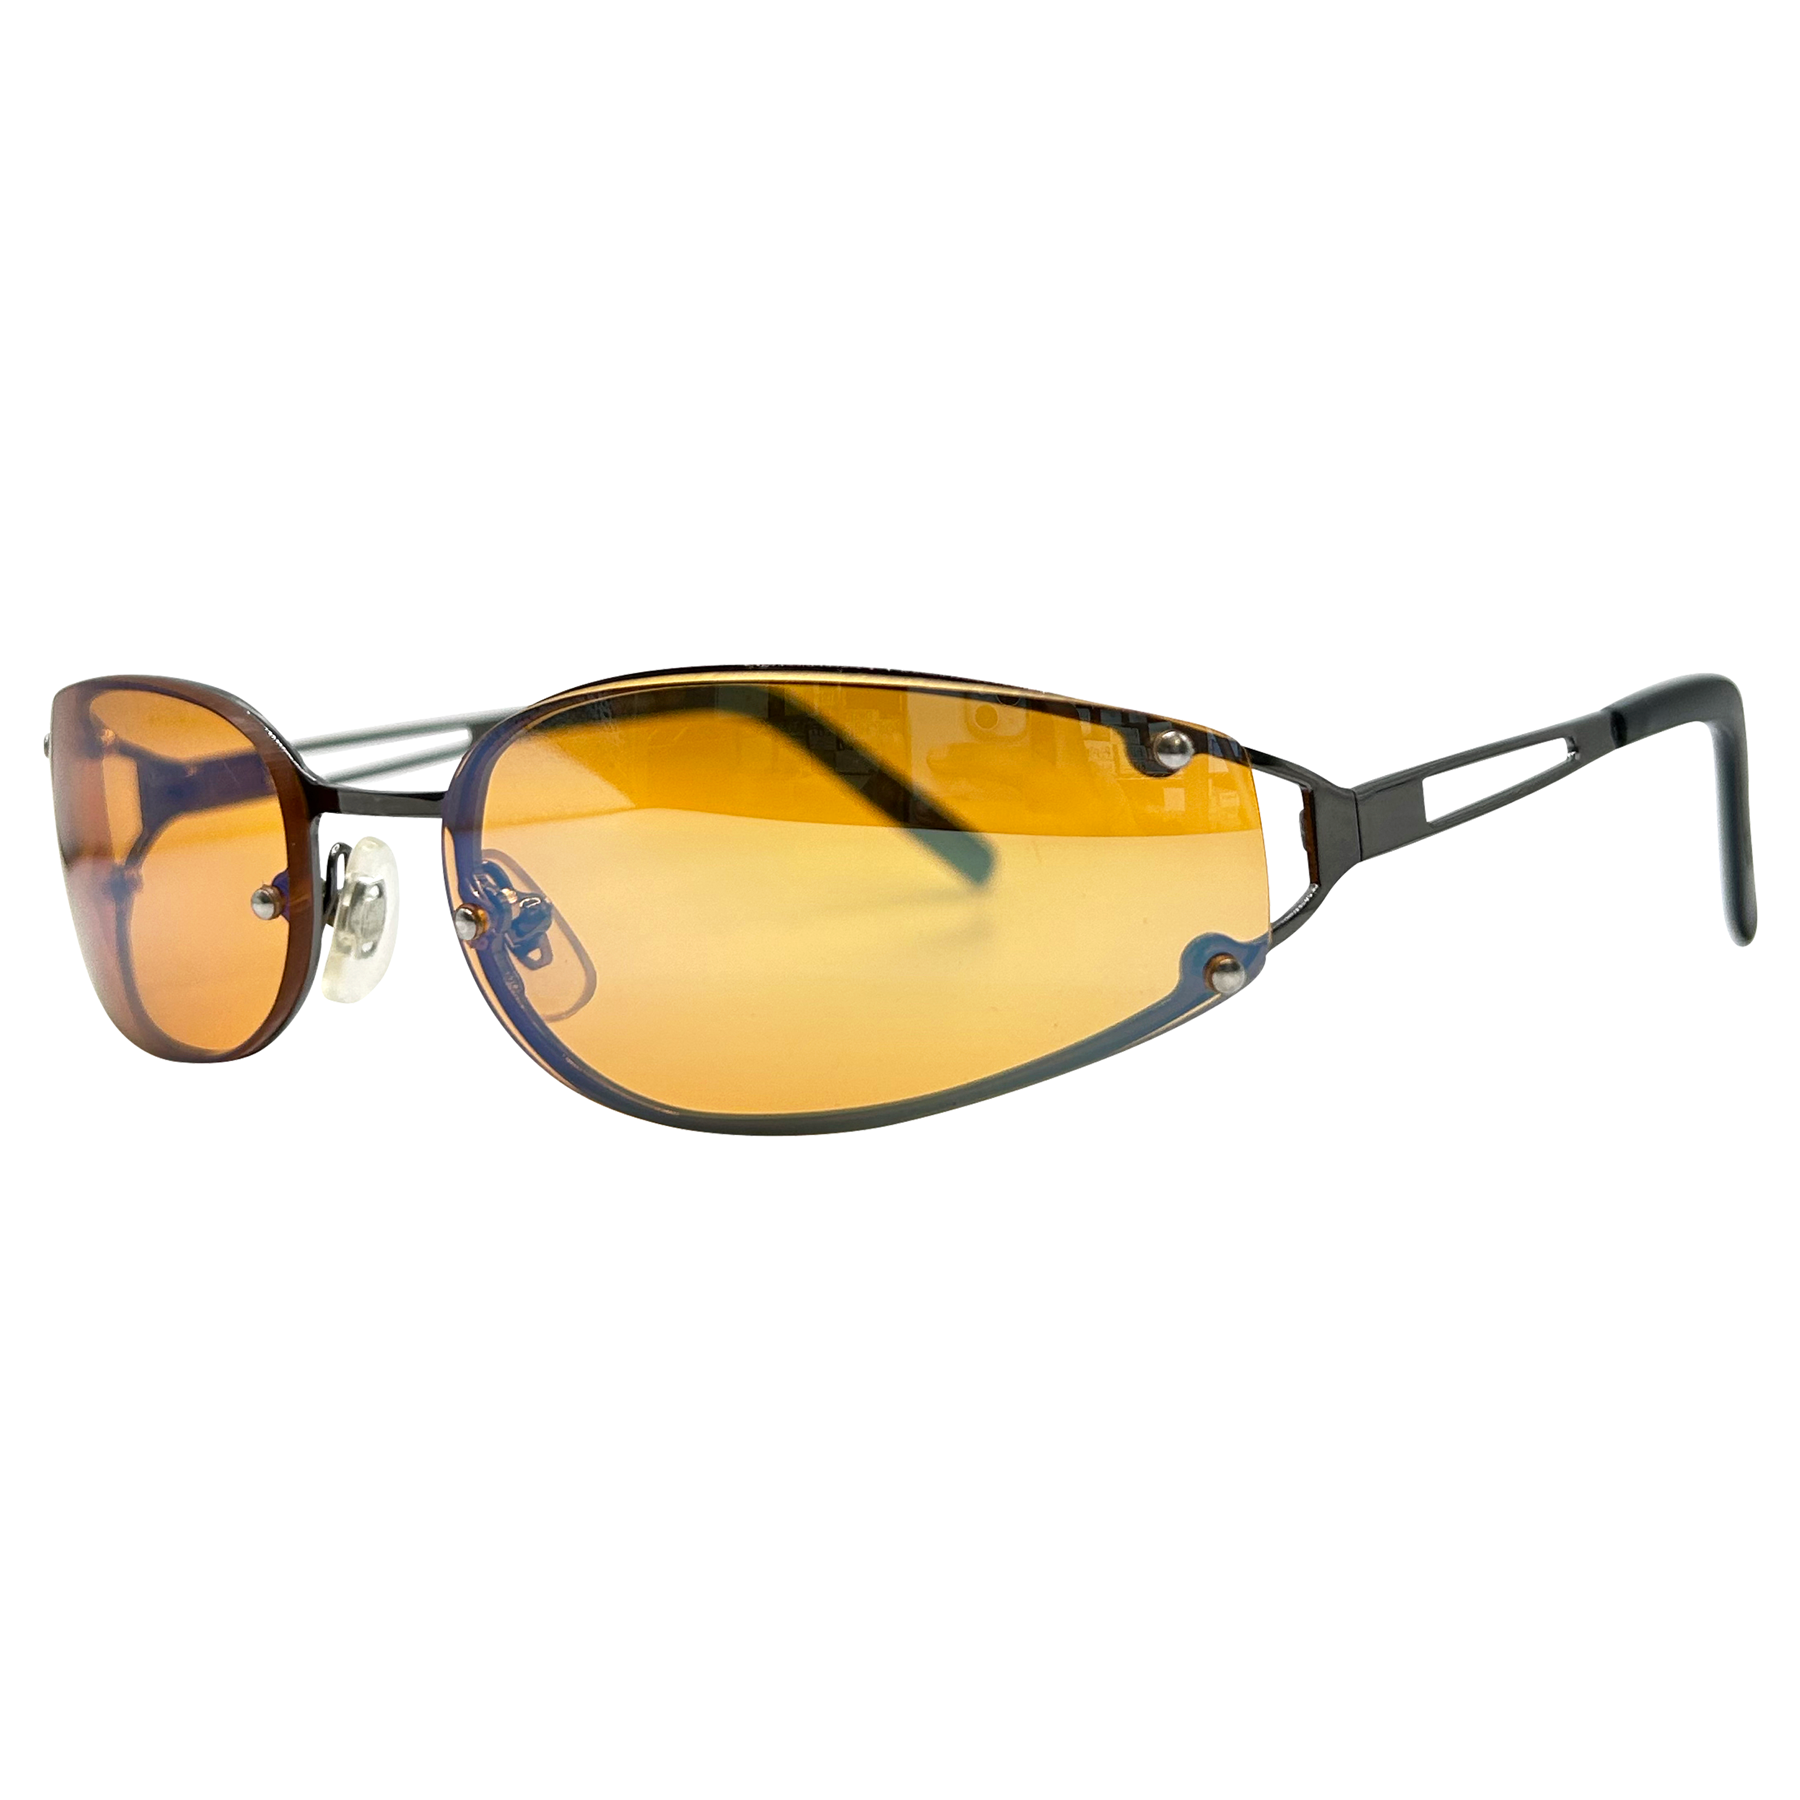 IGLOO Wraparound Sunglasses